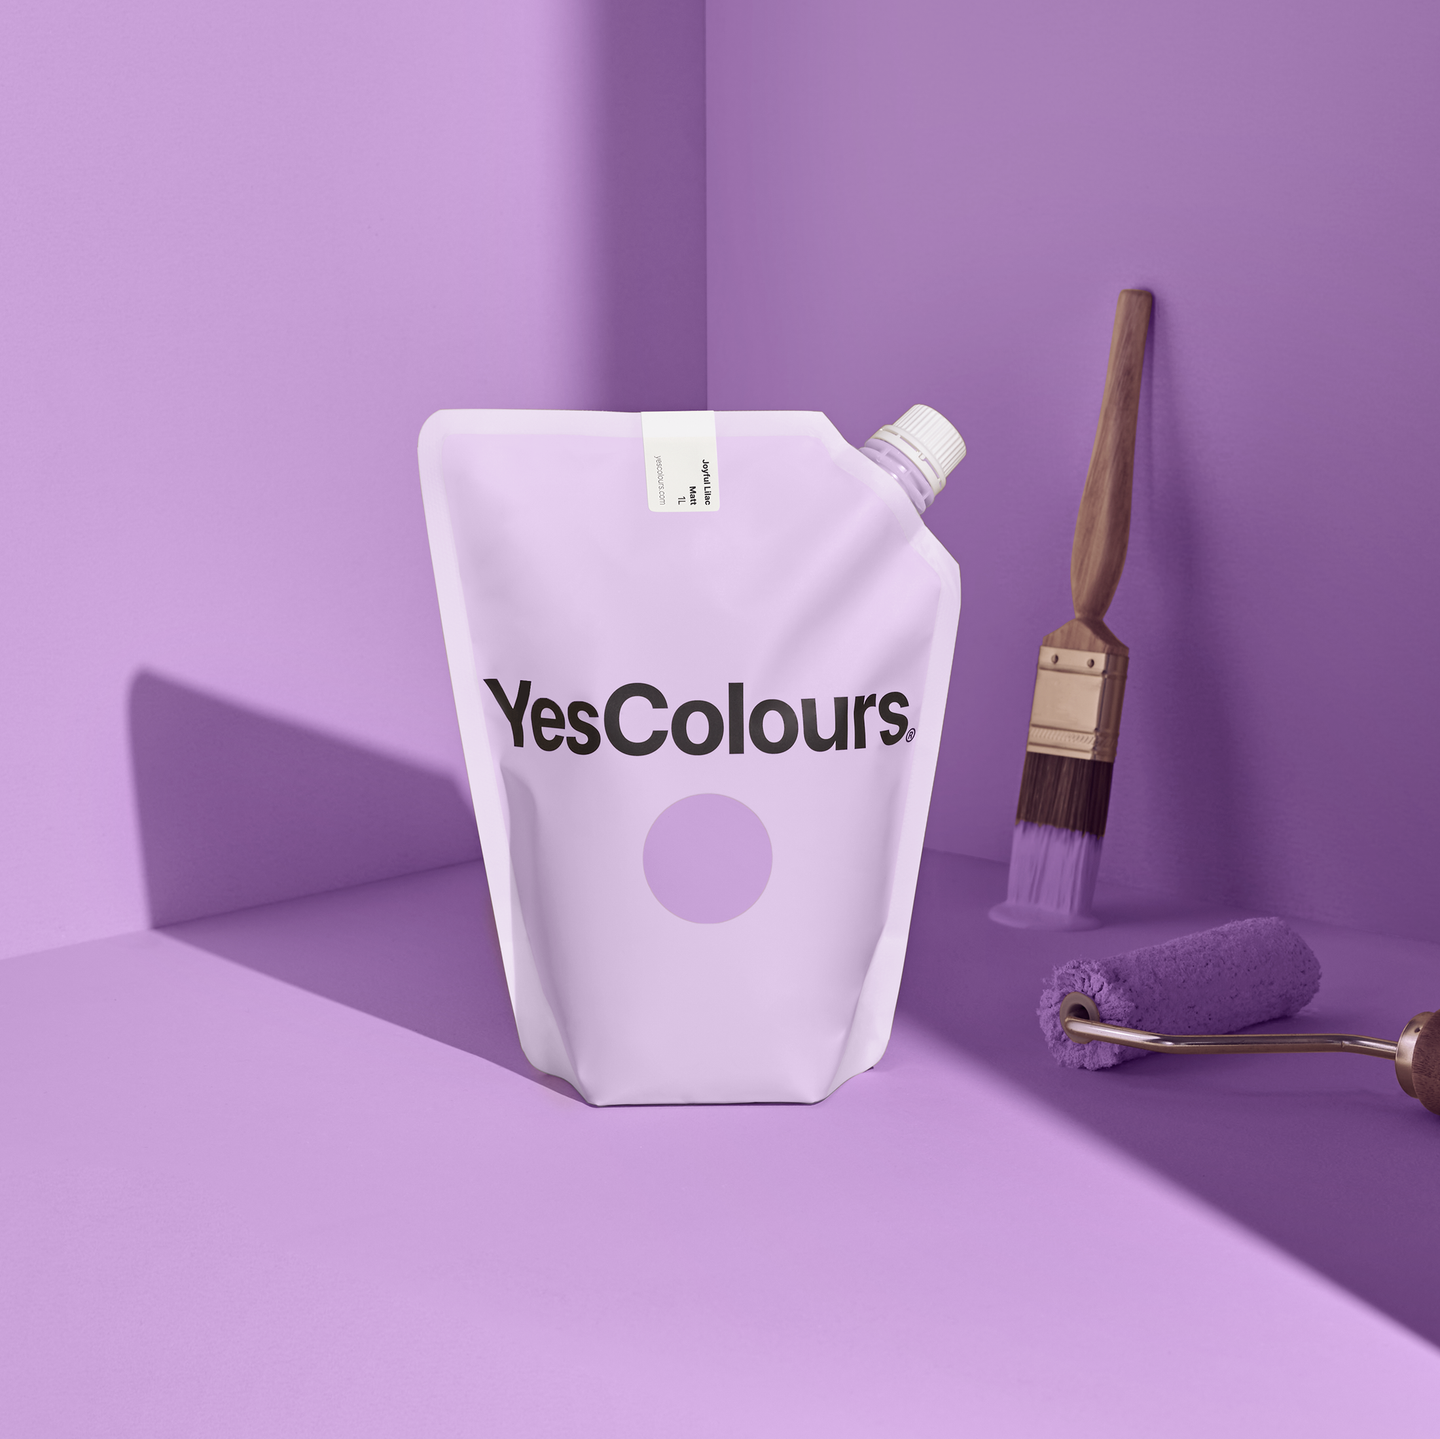 YesColours premium Joyful Lilac matt emulsion paint